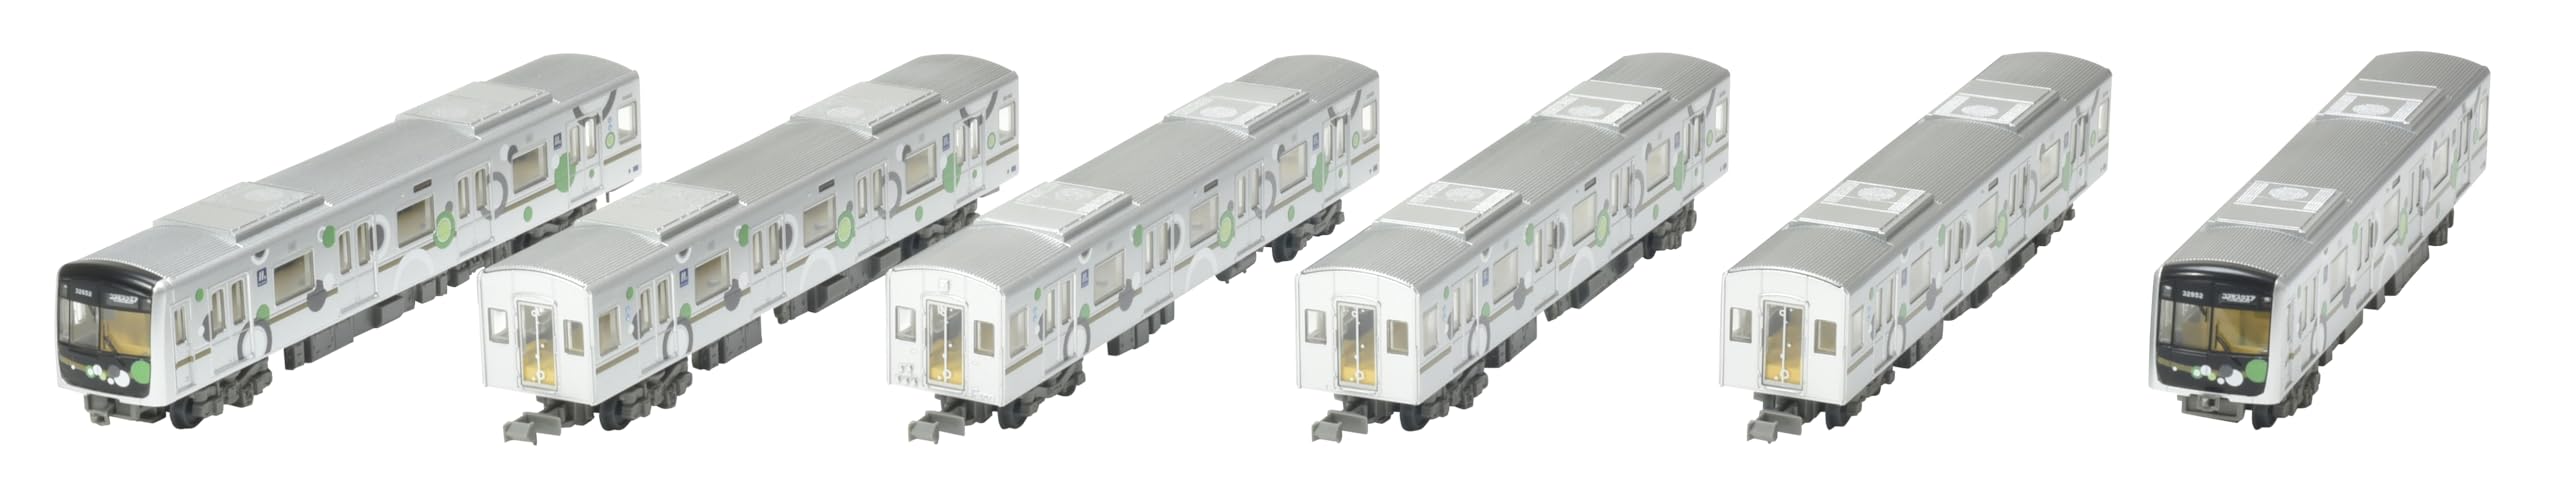 Tomytec Railway Collection Chuo Line 30000A Série 6 voitures Diorama Set Osakametro